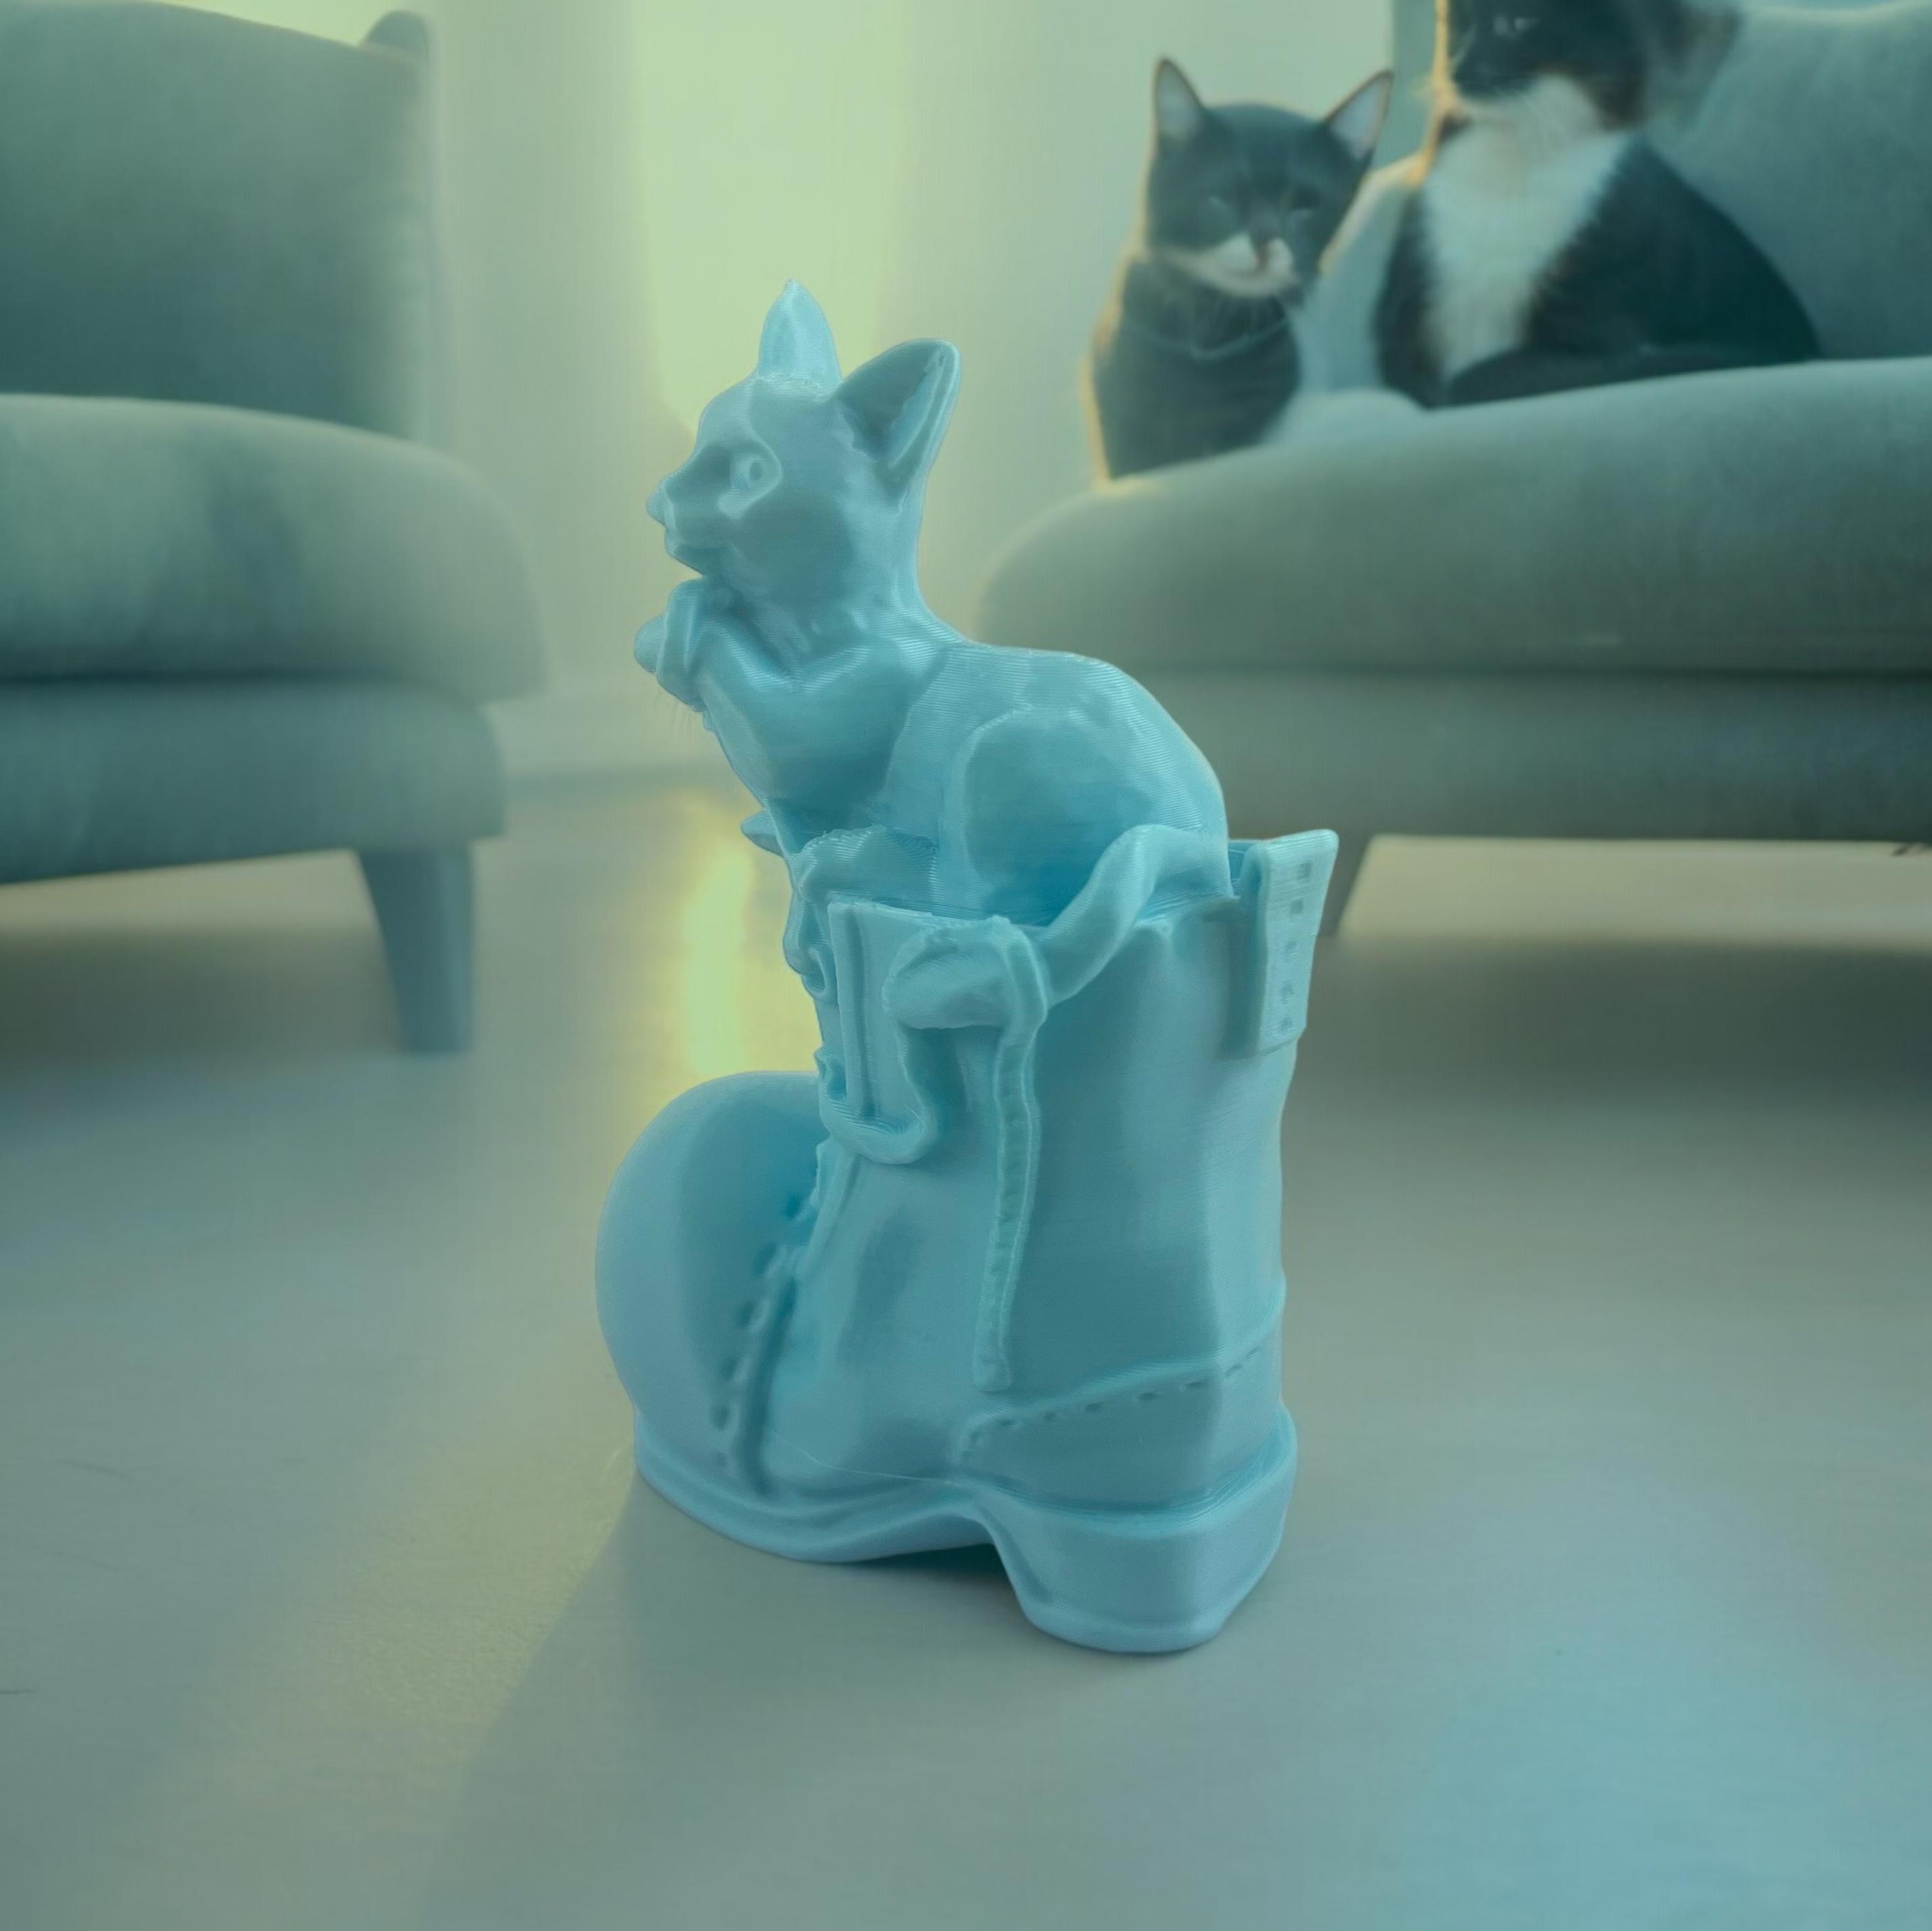 cat on boot new 3d model